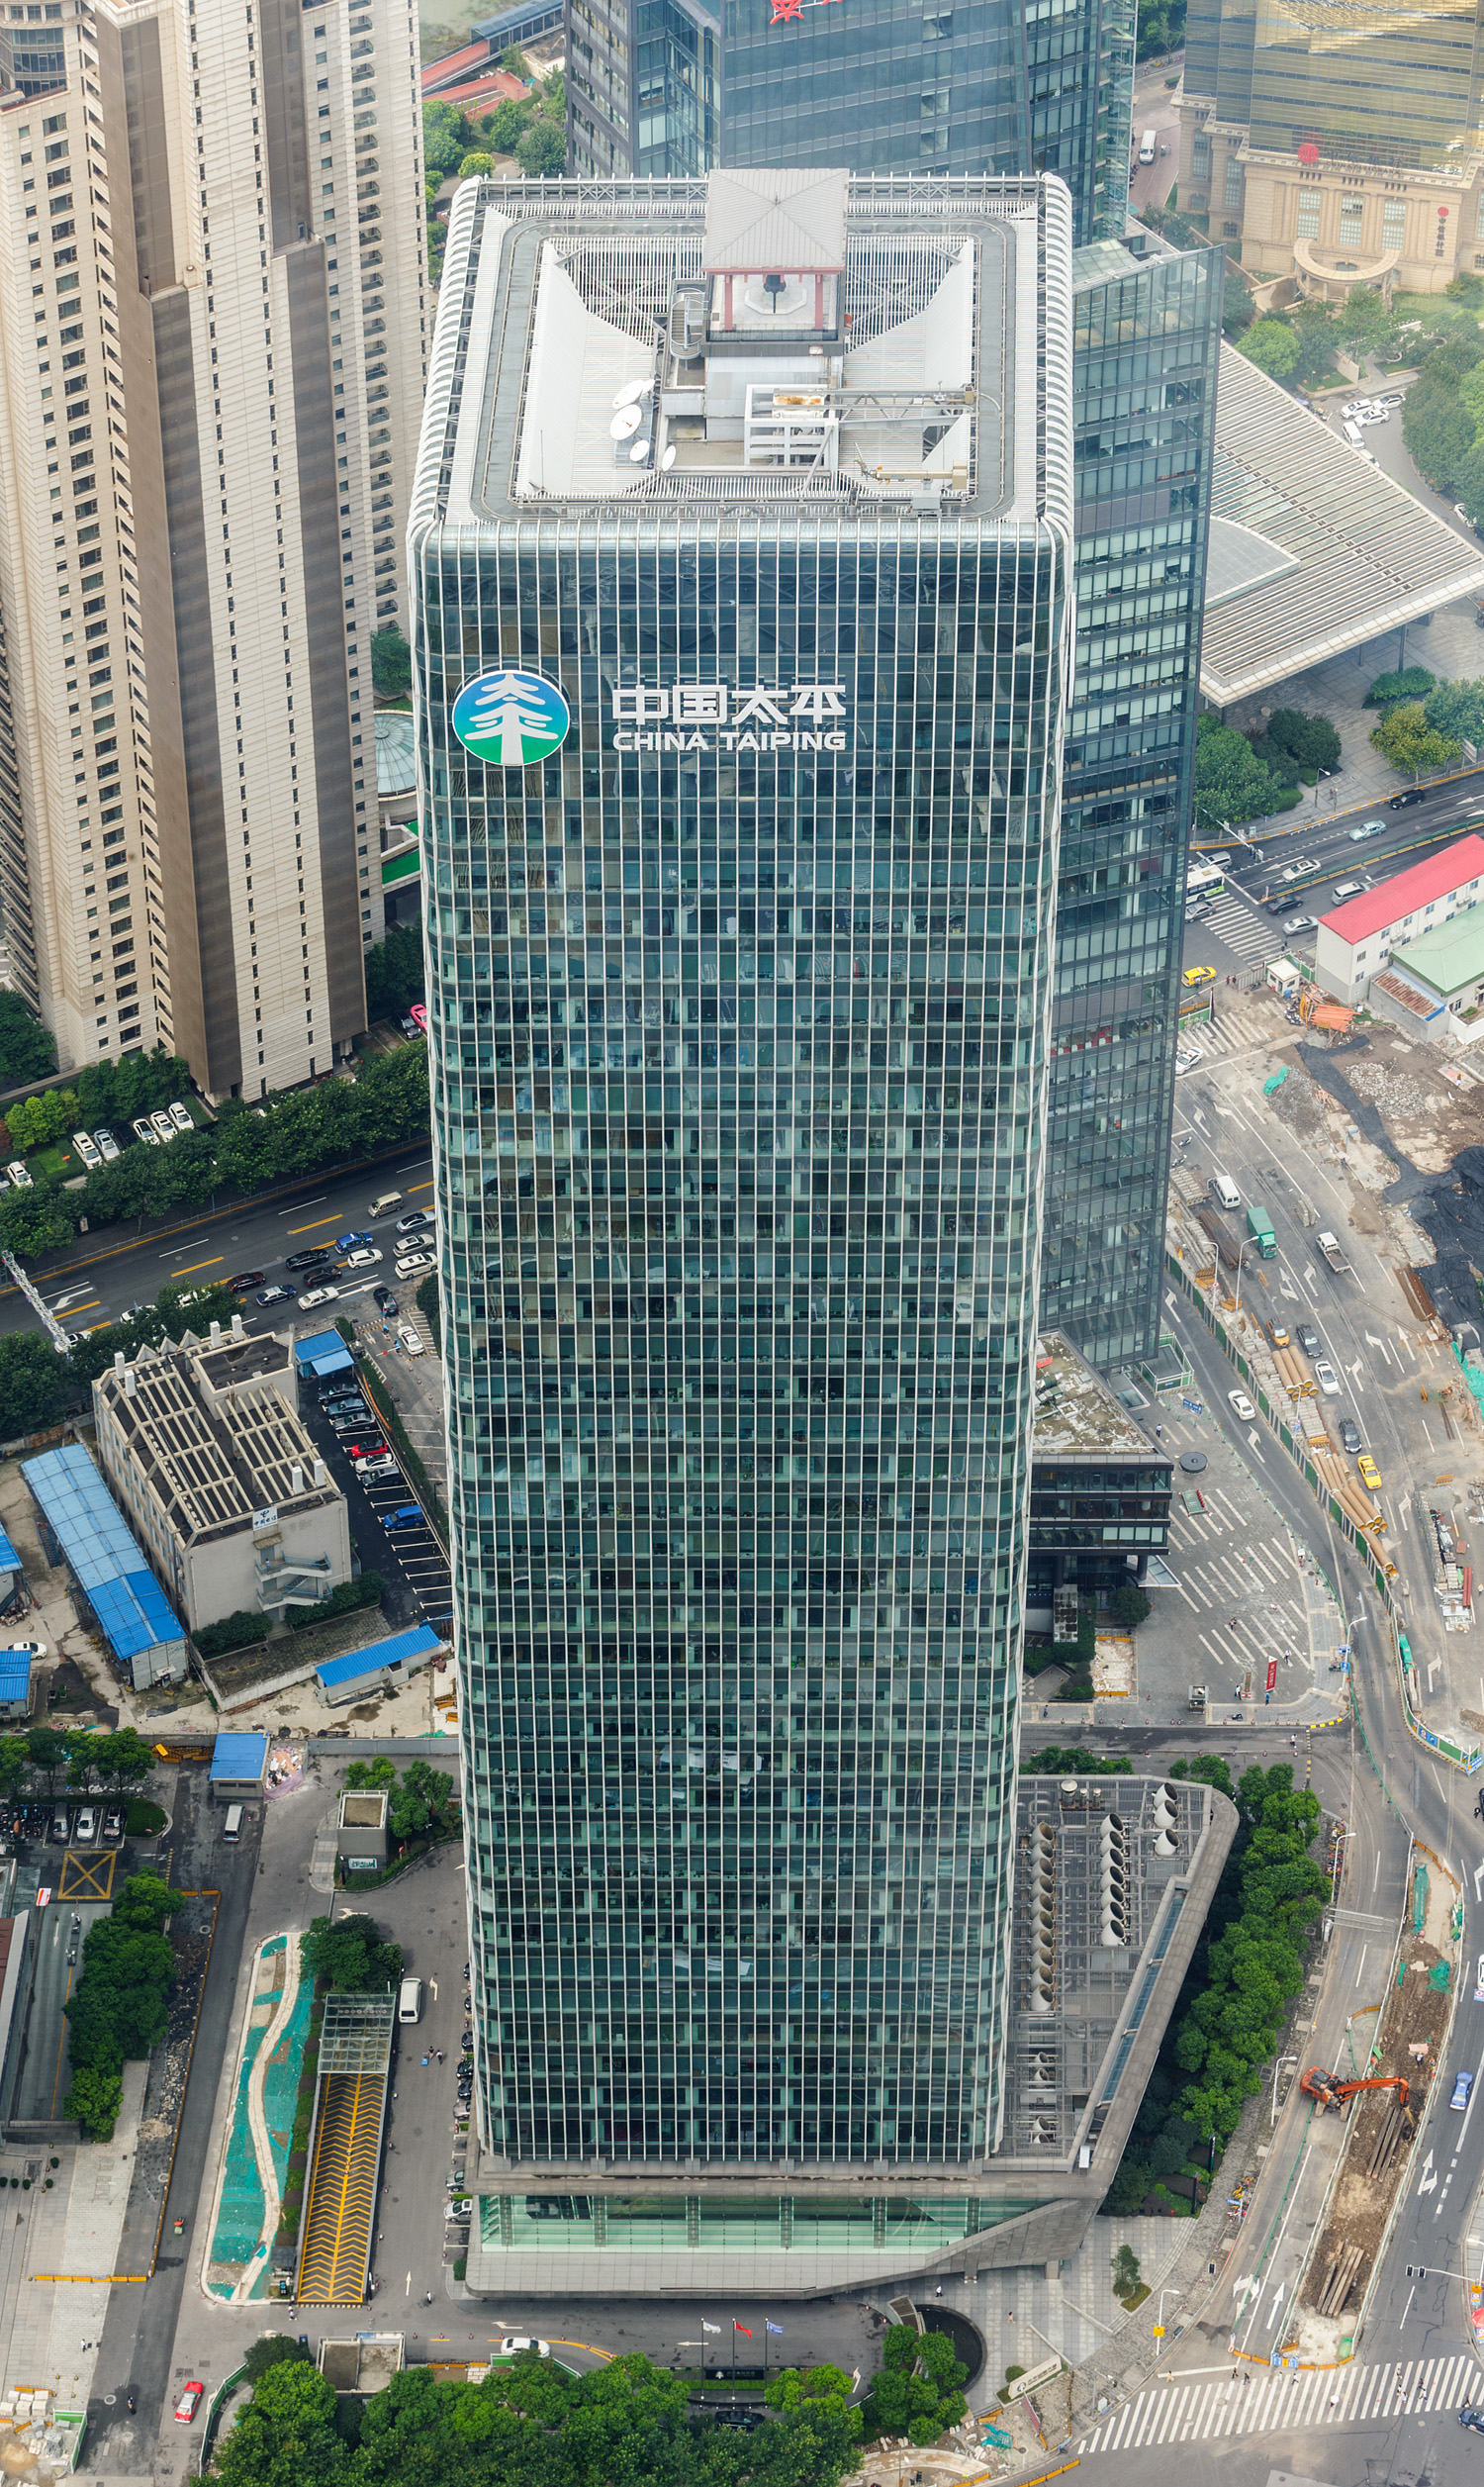 Taiping Financial Tower, Shanghai - View from Shanghai World Financial Center. © Mathias Beinling